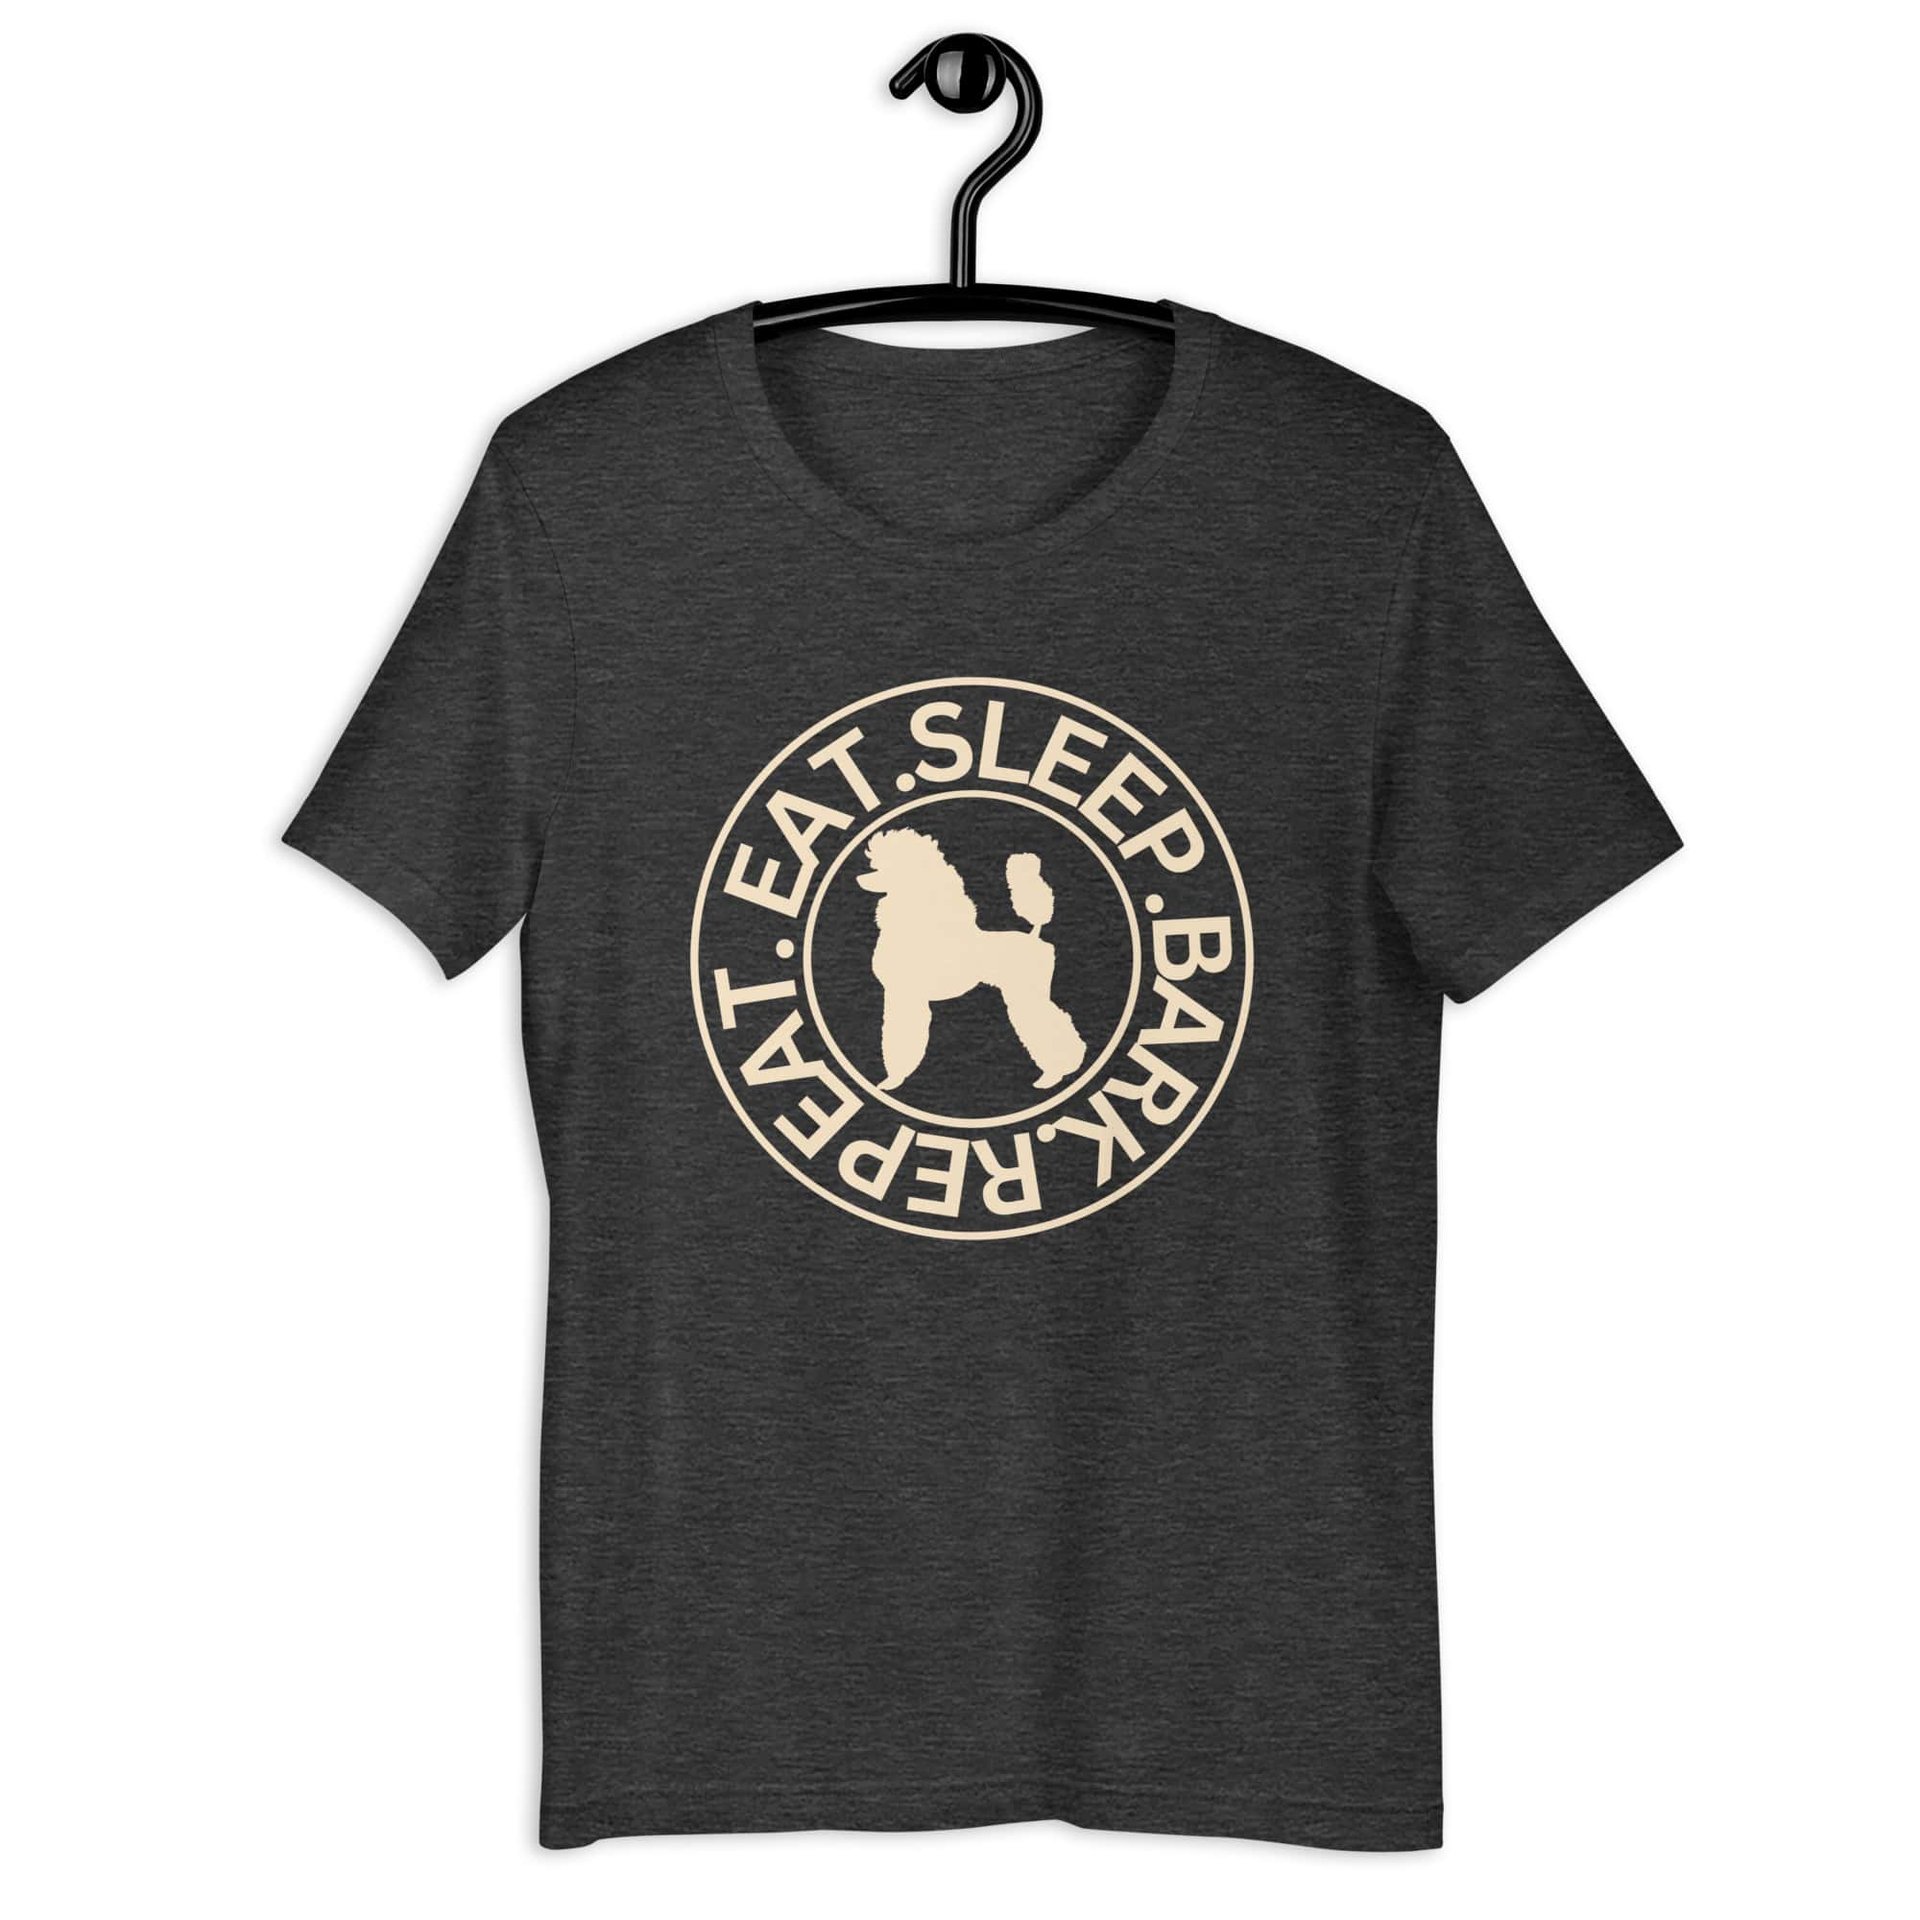 Eat Sleep Repeat Bark Miniature Poodle Unisex T-Shirt. Dark Grey